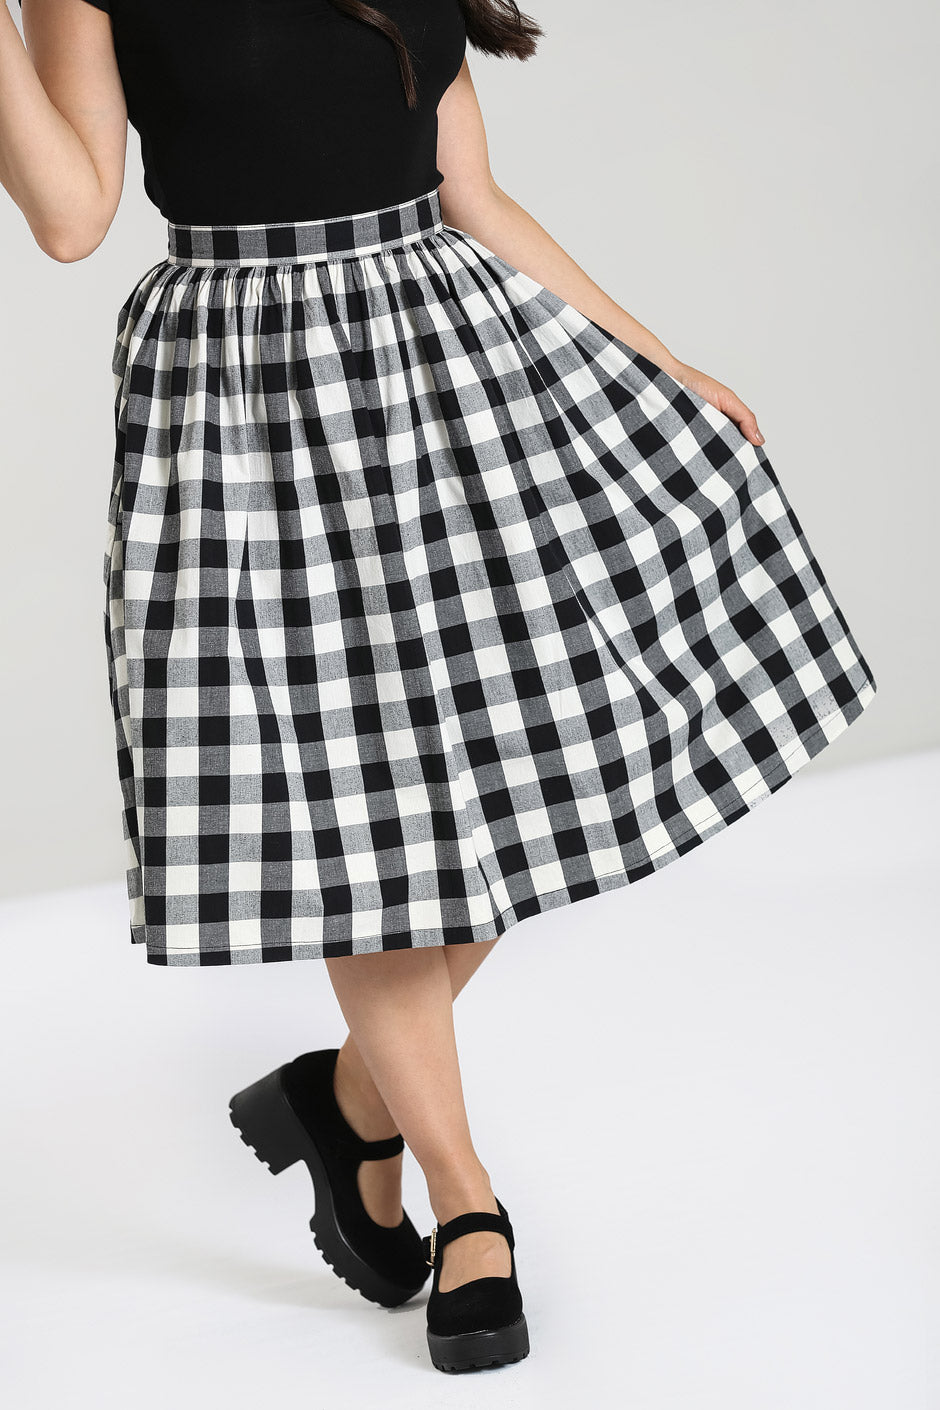 Victorine 50's Skirt